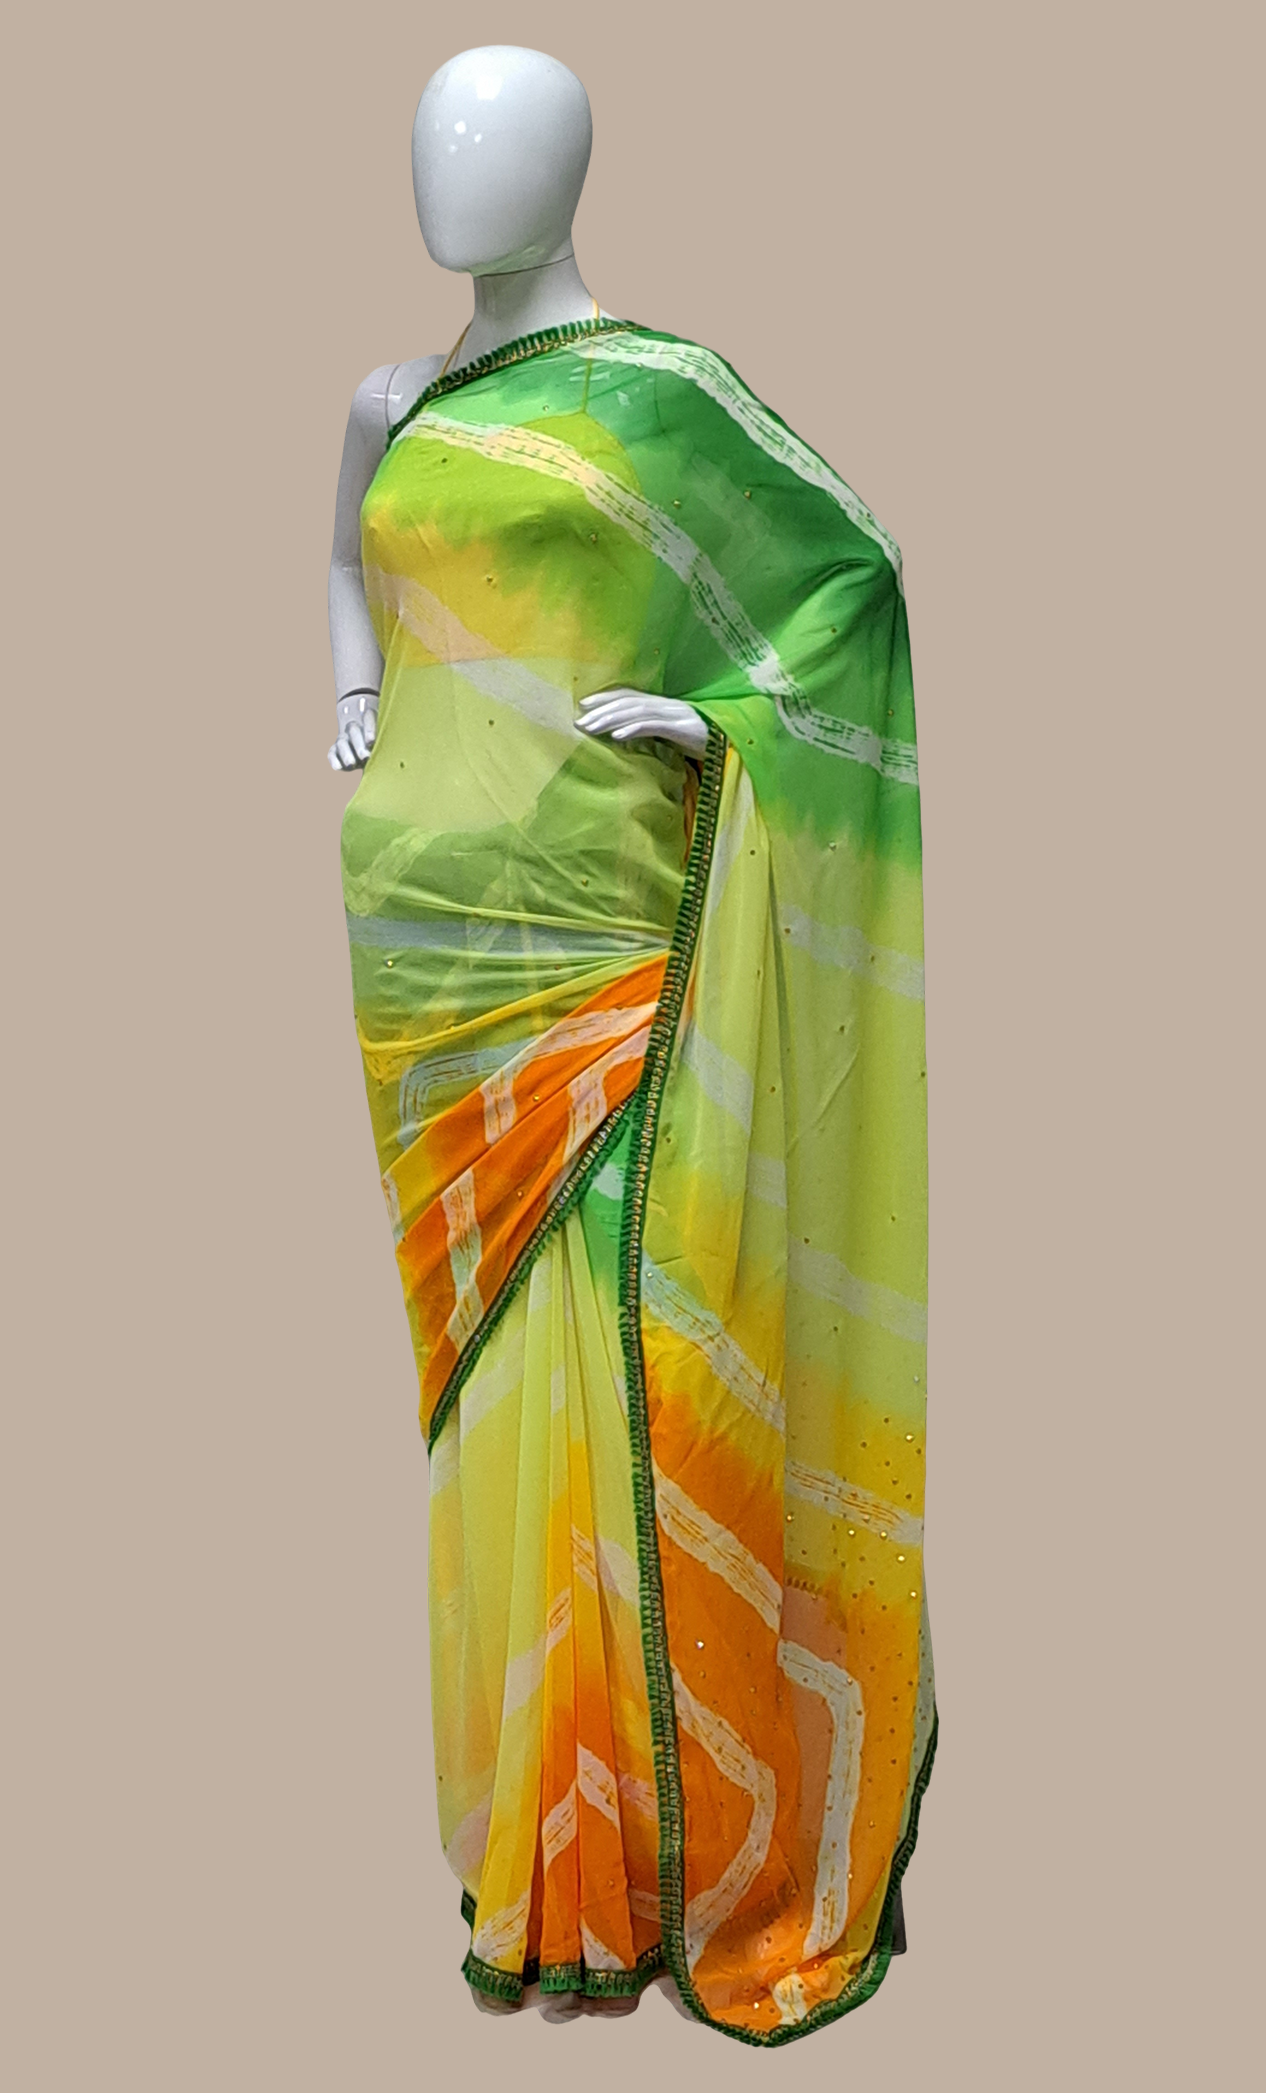 Lime Green Printed Sari